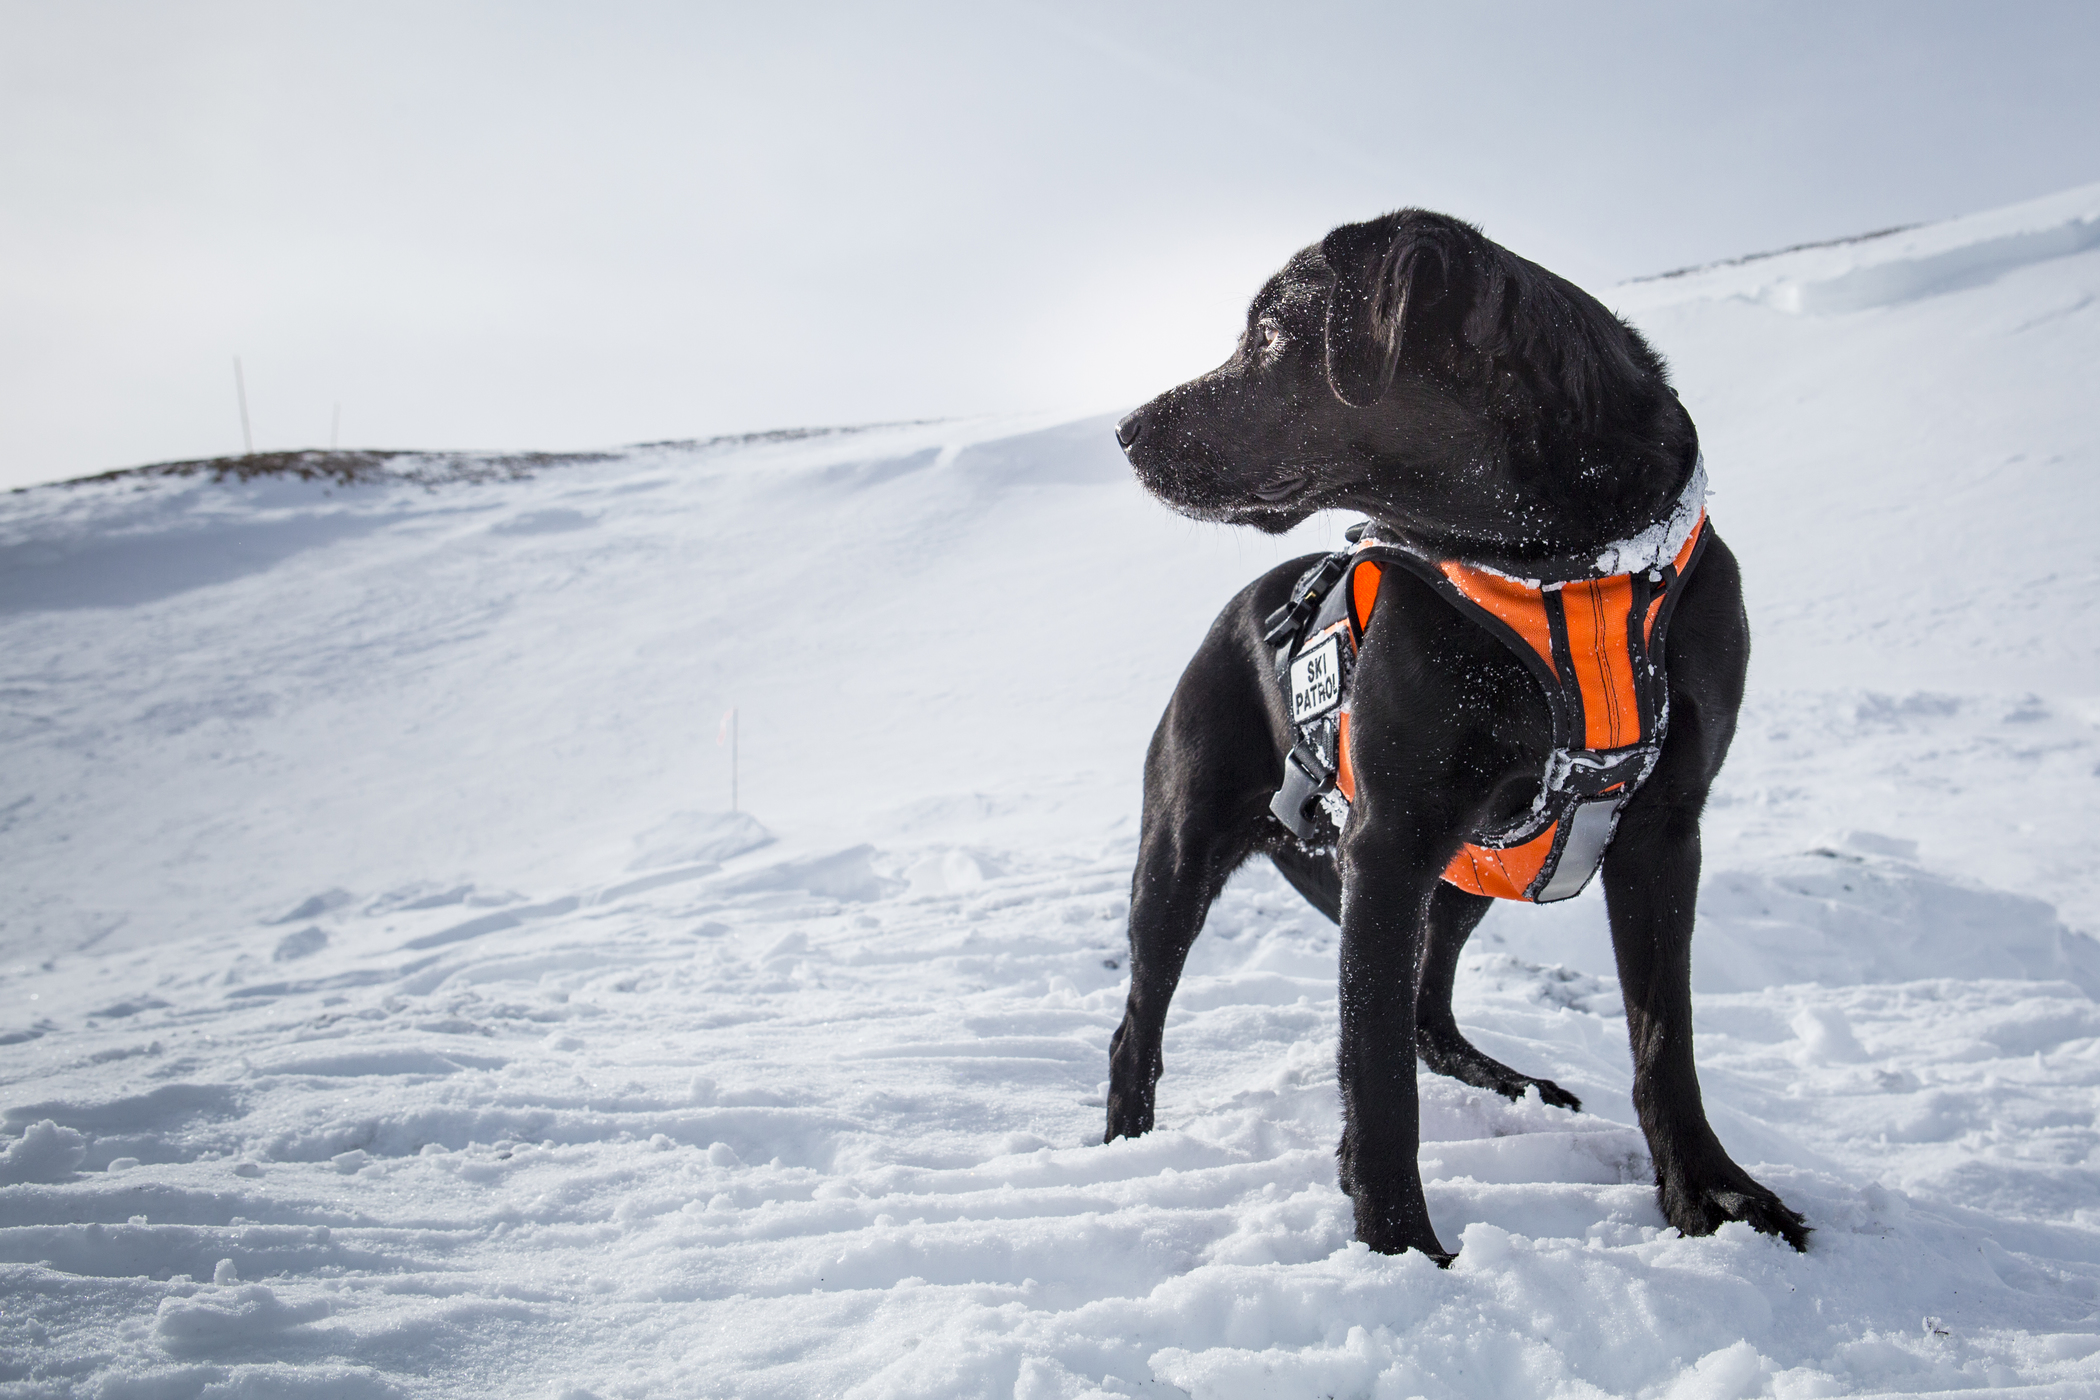 Aspen Snowmass Ski Patrol Dog